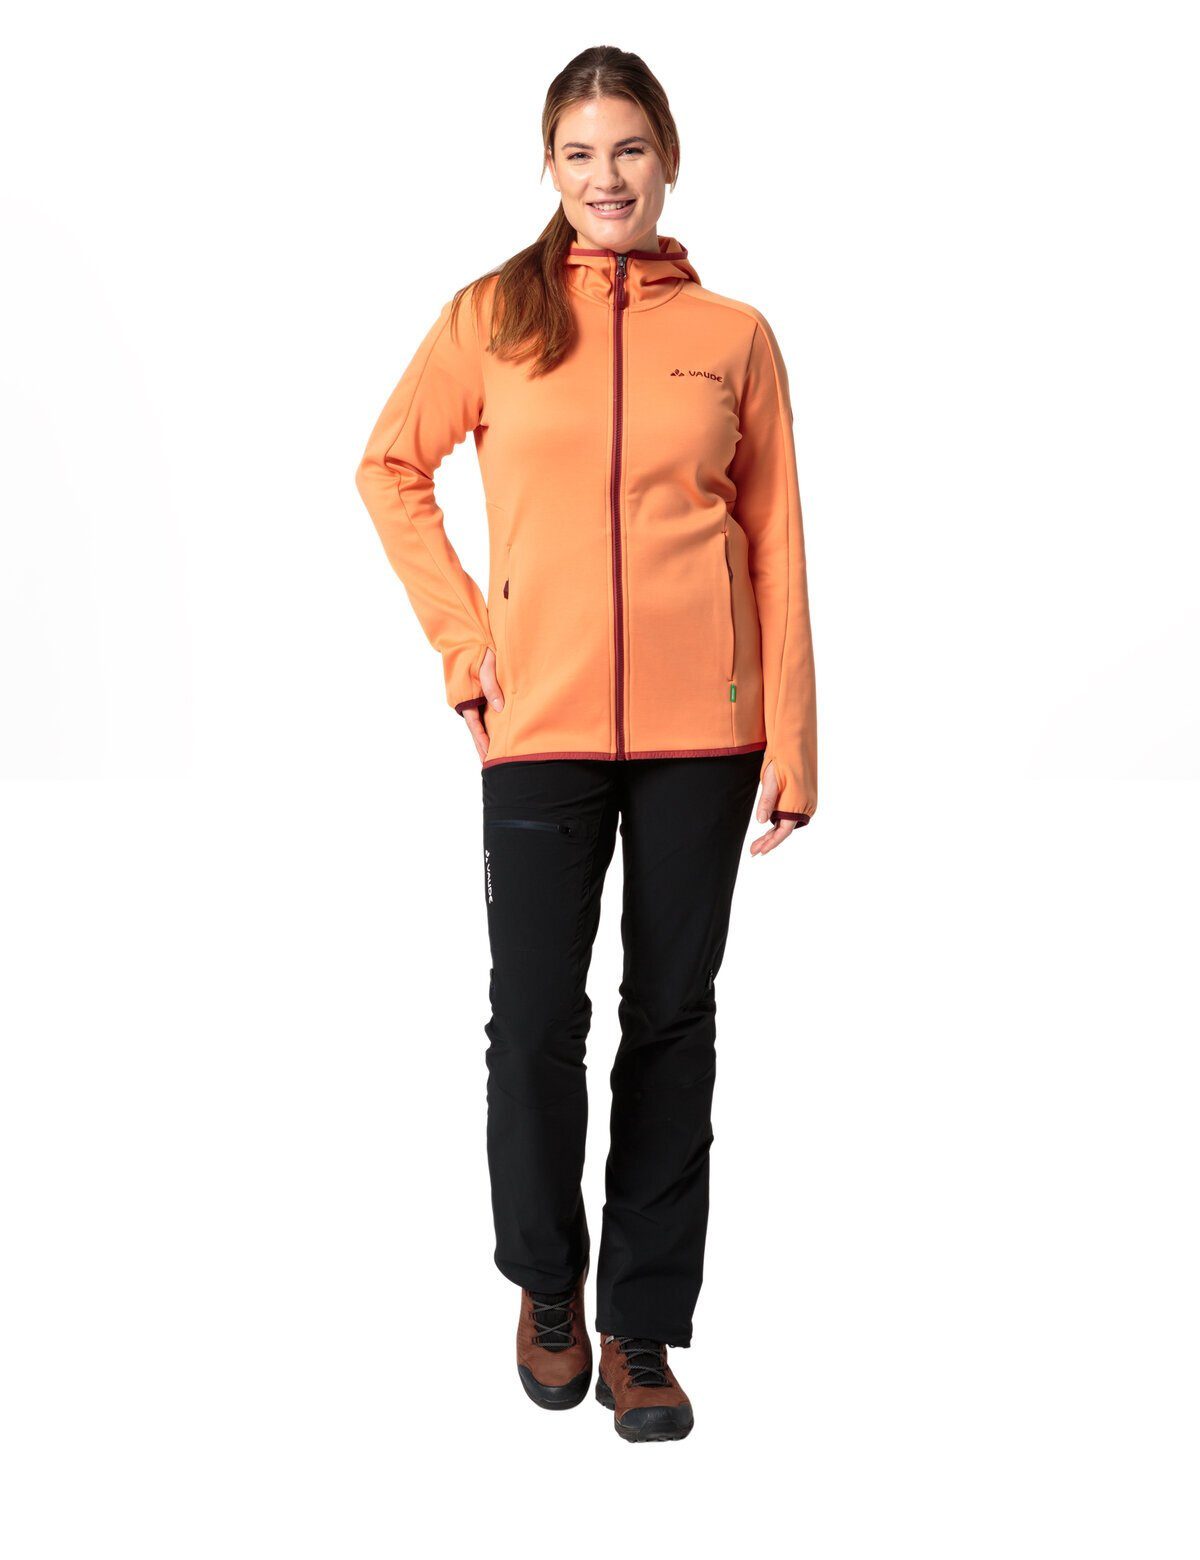 VAUDE Outdoorjacke Women's Valsorda Fleece kompensiert Klimaneutral (1-St) Hoody orange sweet